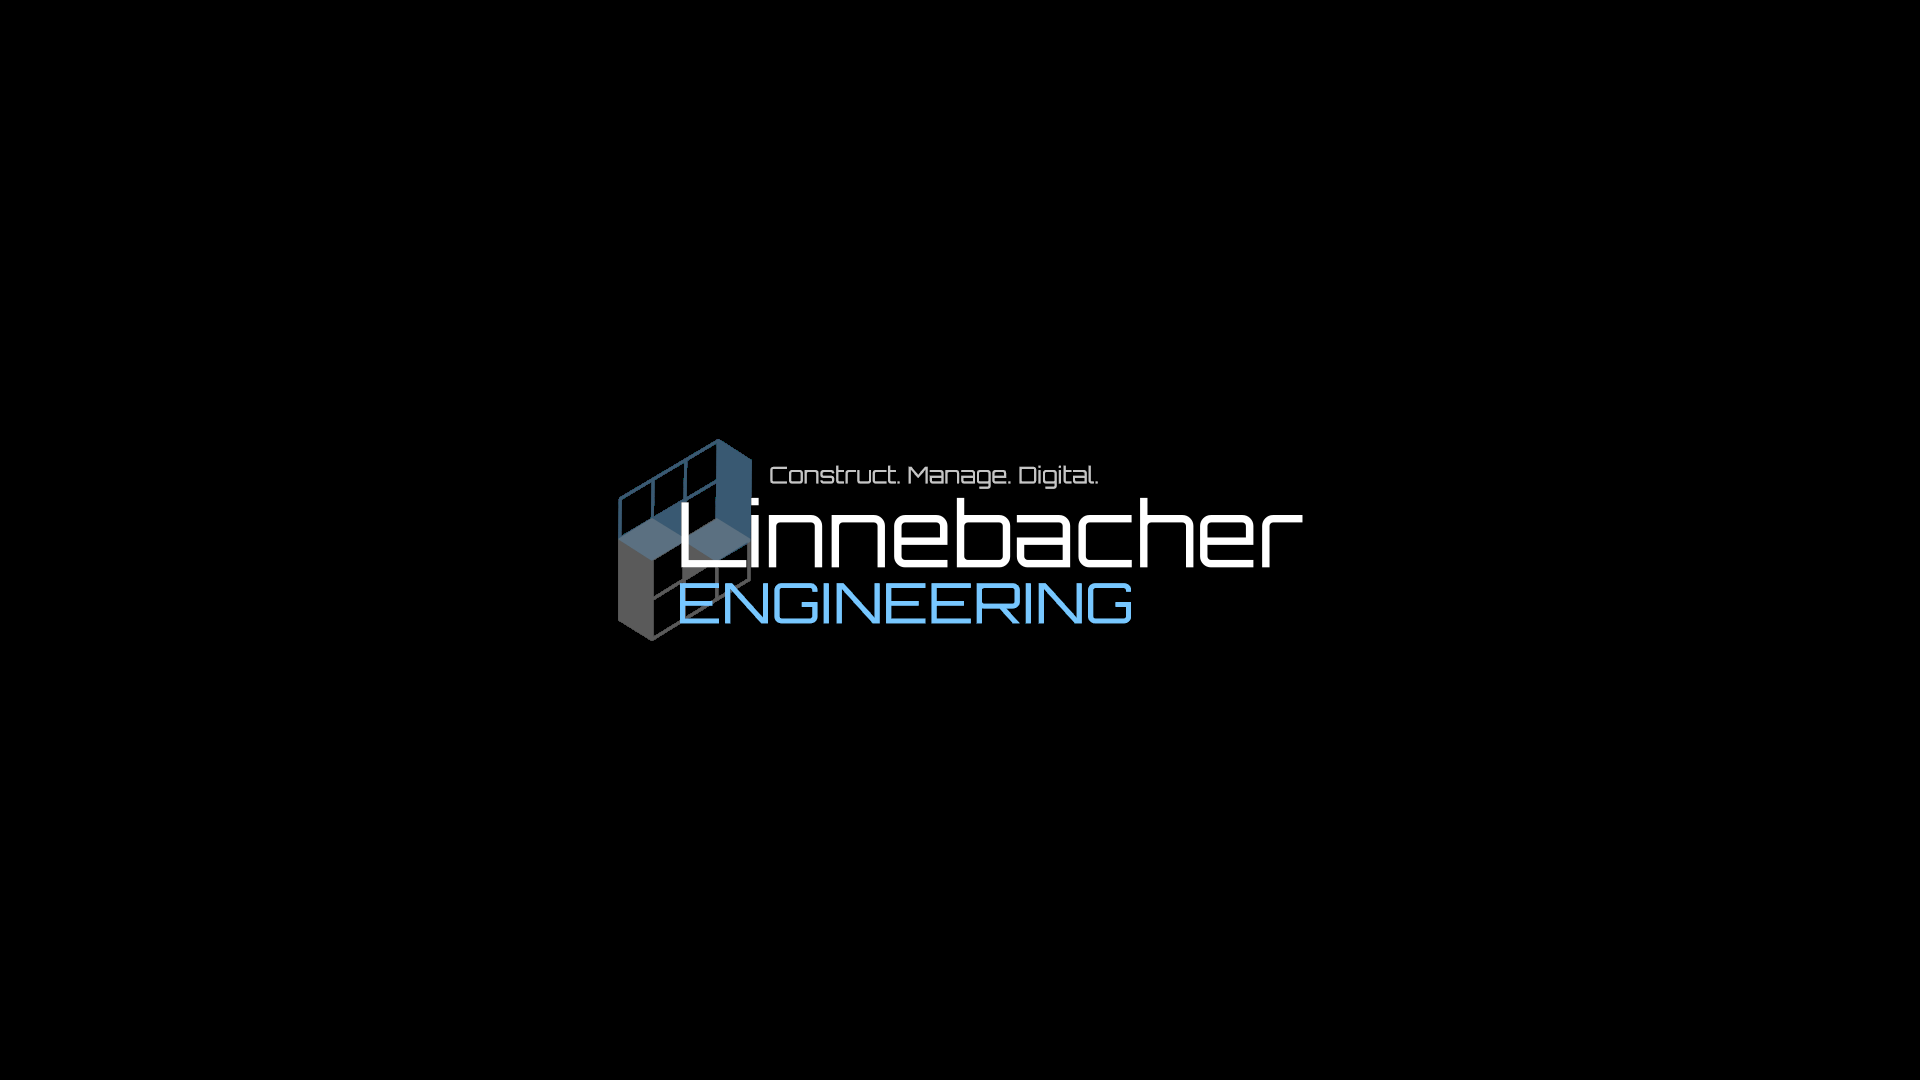 Linnebacher EngineerIng